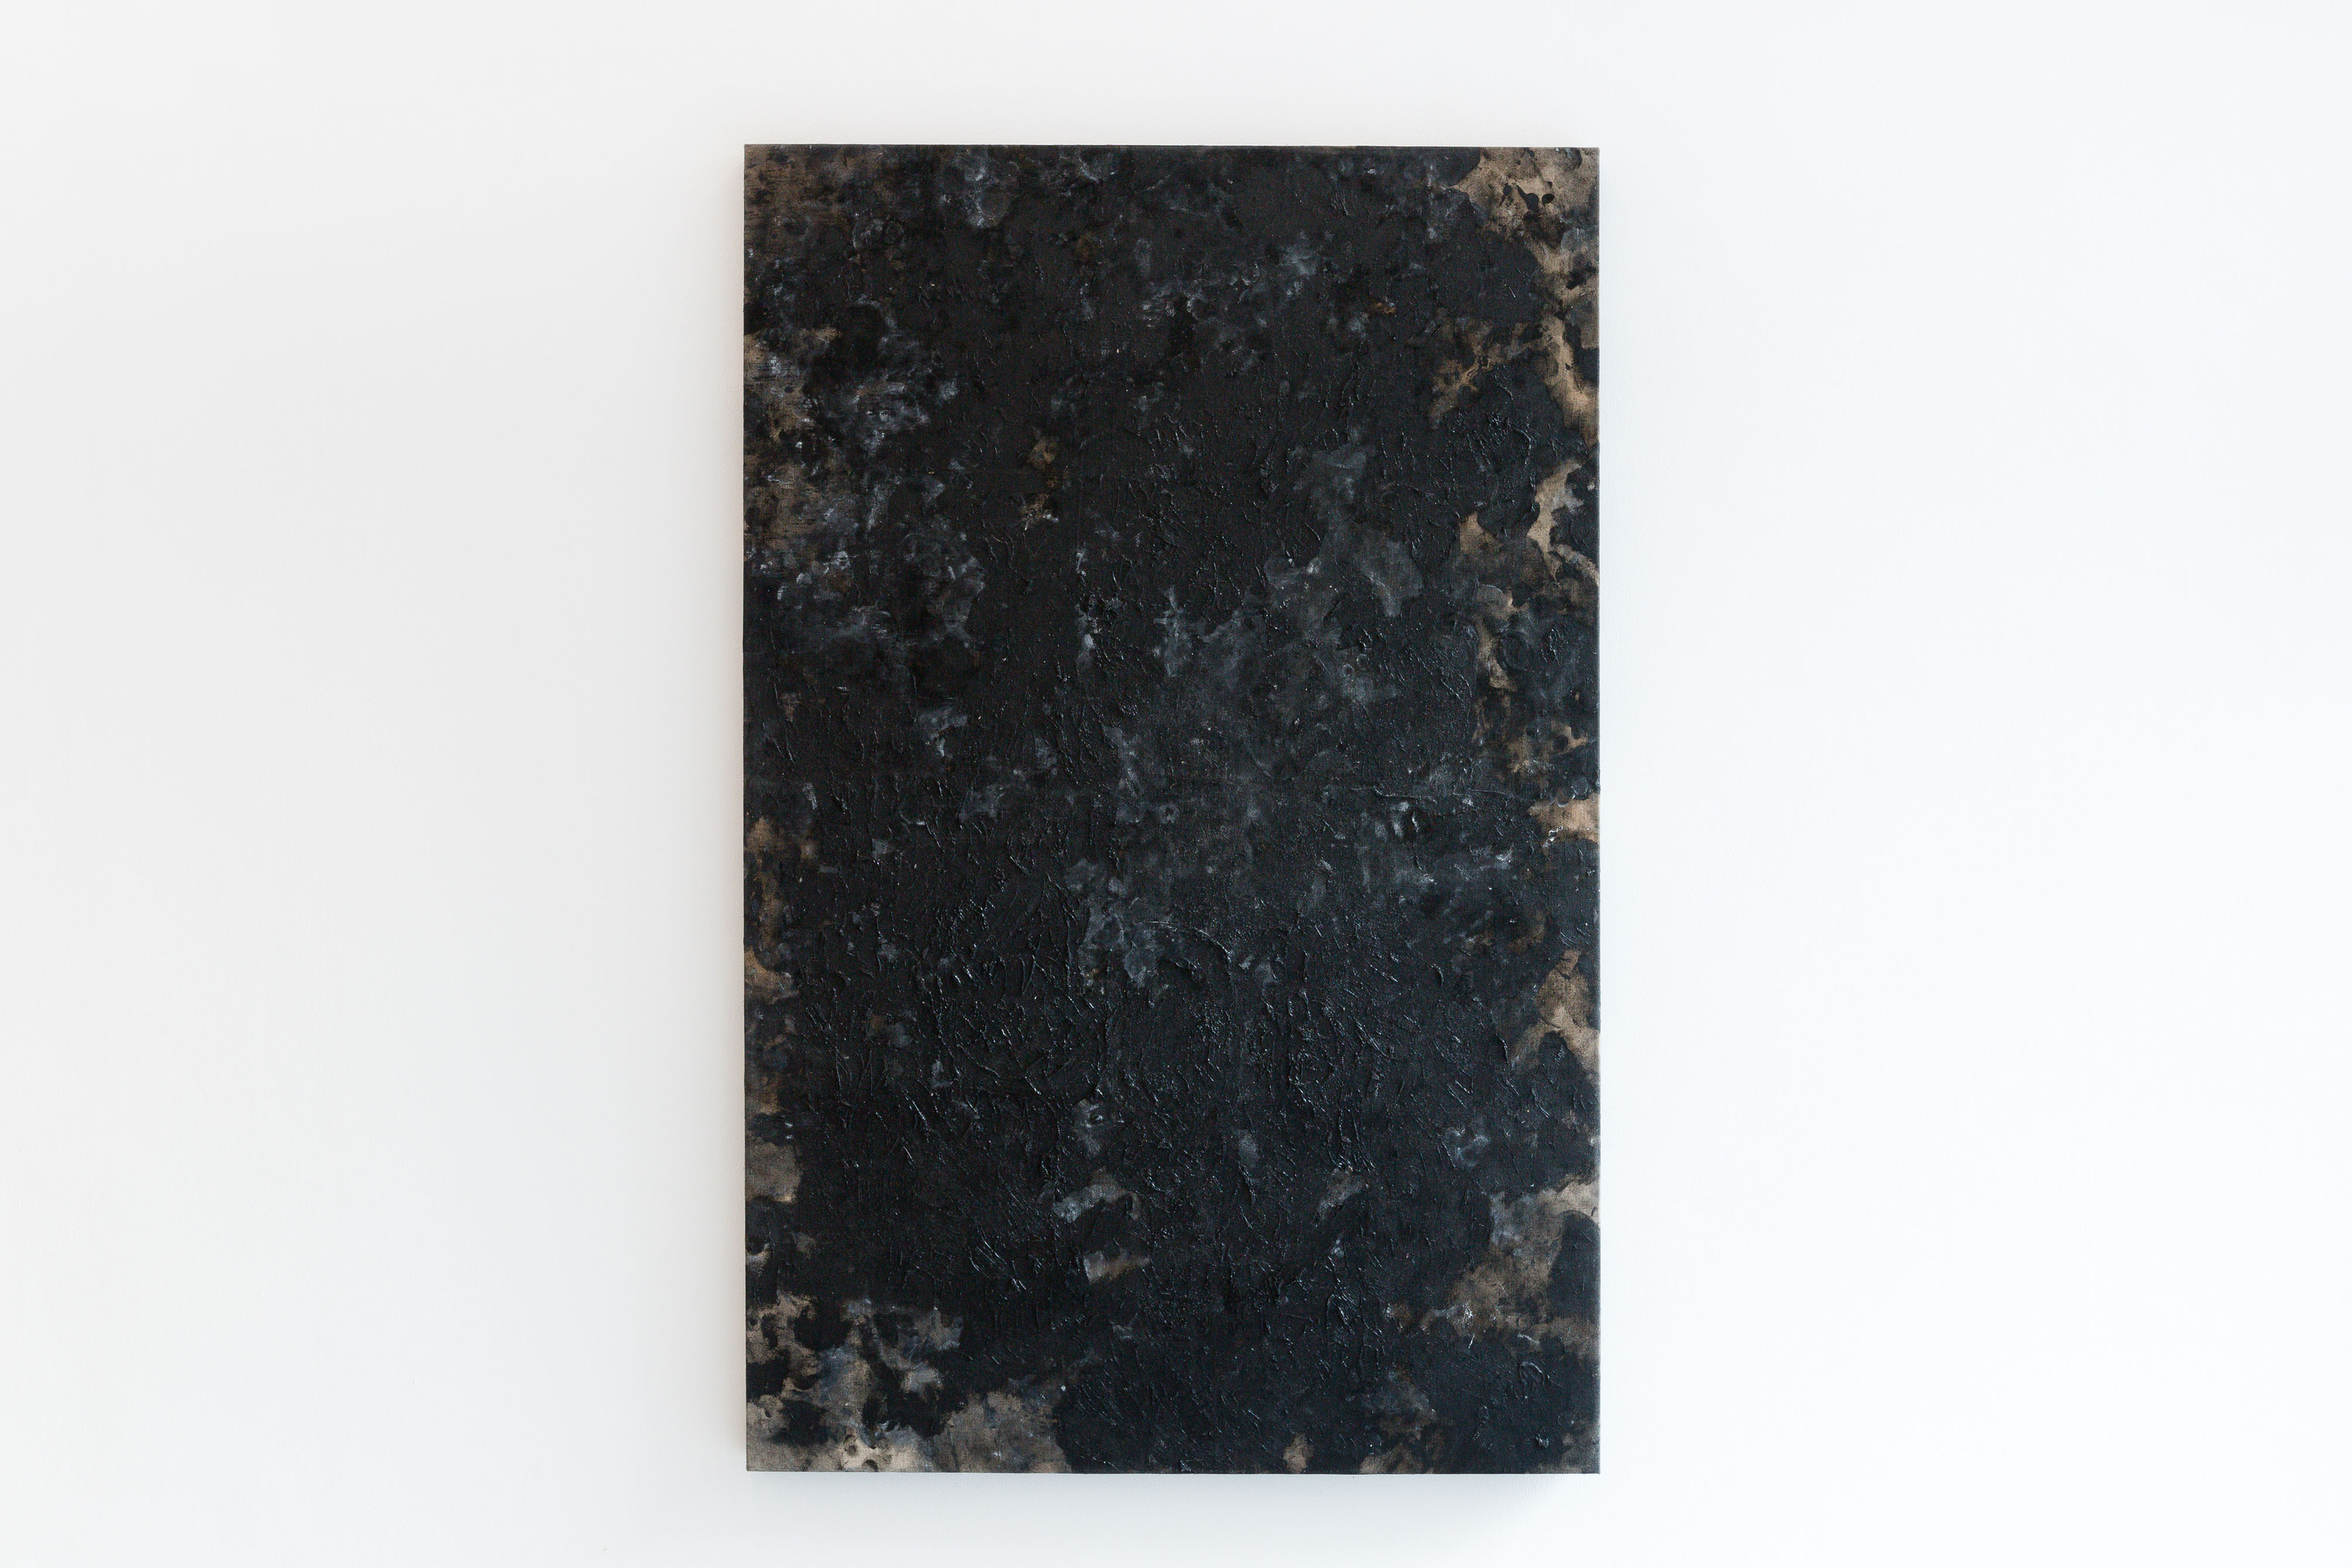 Phoebe Collings-James, Ivory Black [#5], 2014, oil on linen, 133 x 85 cm